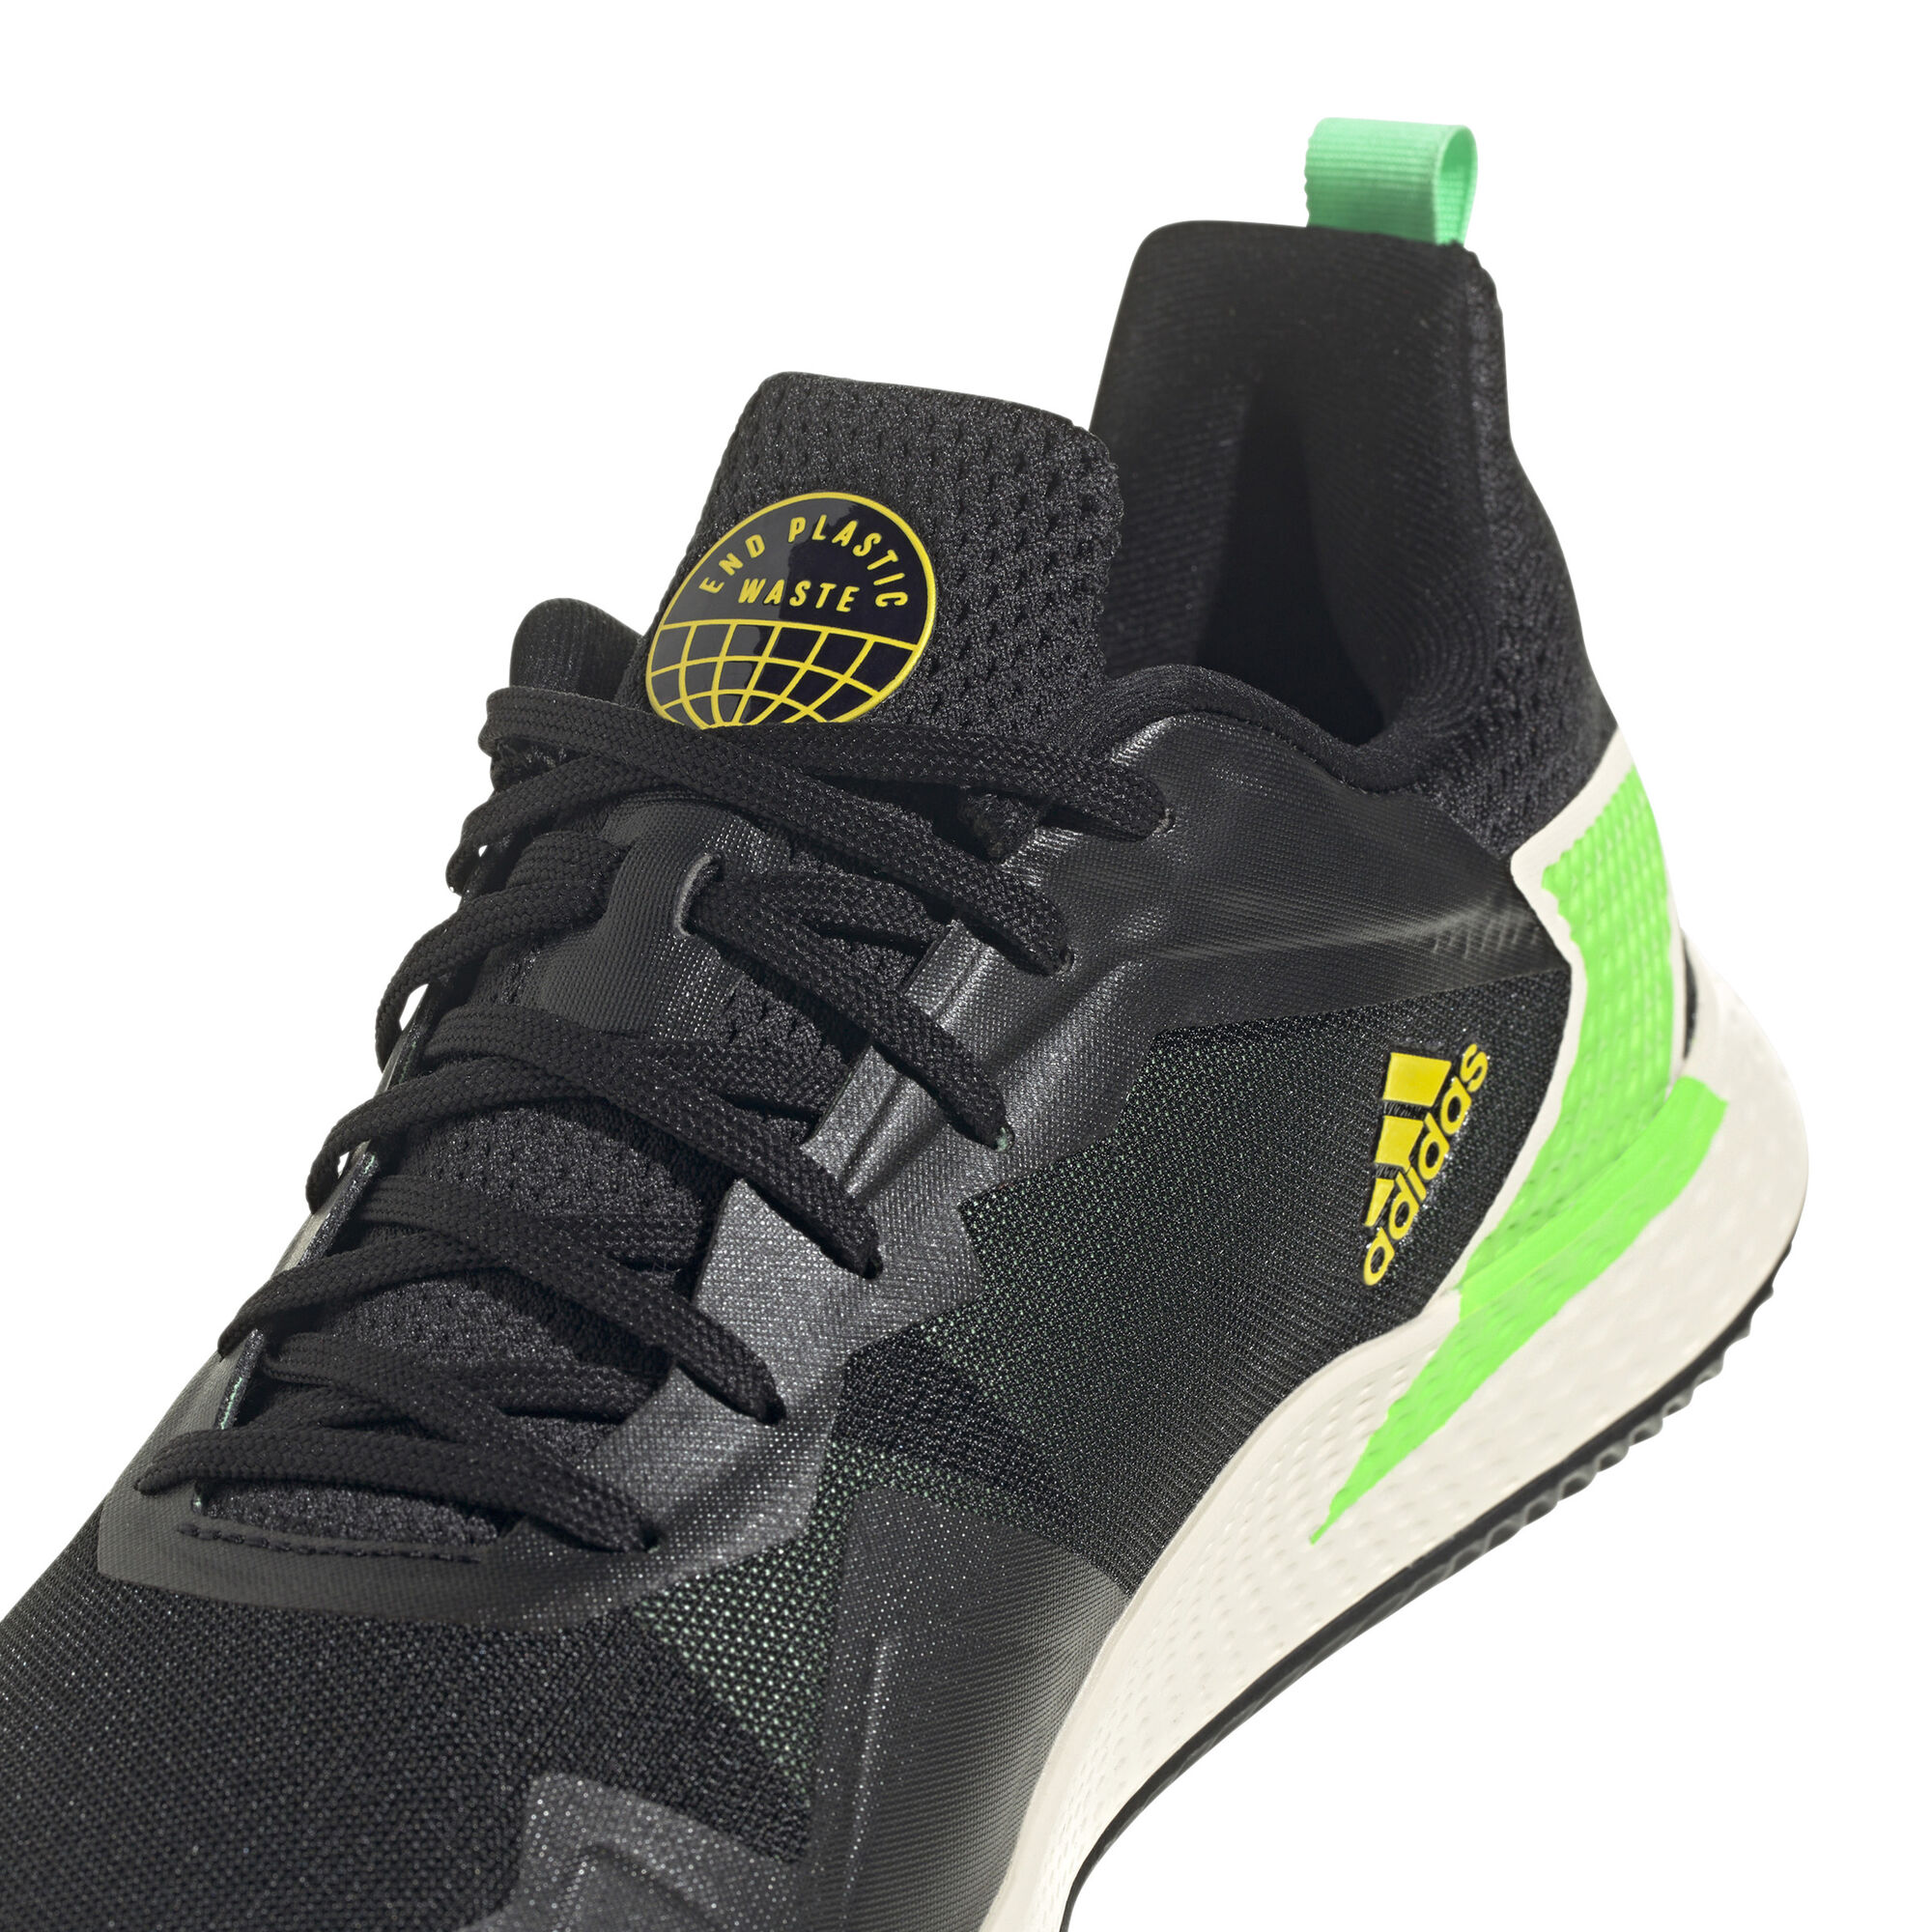 COM Point | Buy online Defiant Neon adidas Speed Court Clay Green Shoe Tennis Black, Men